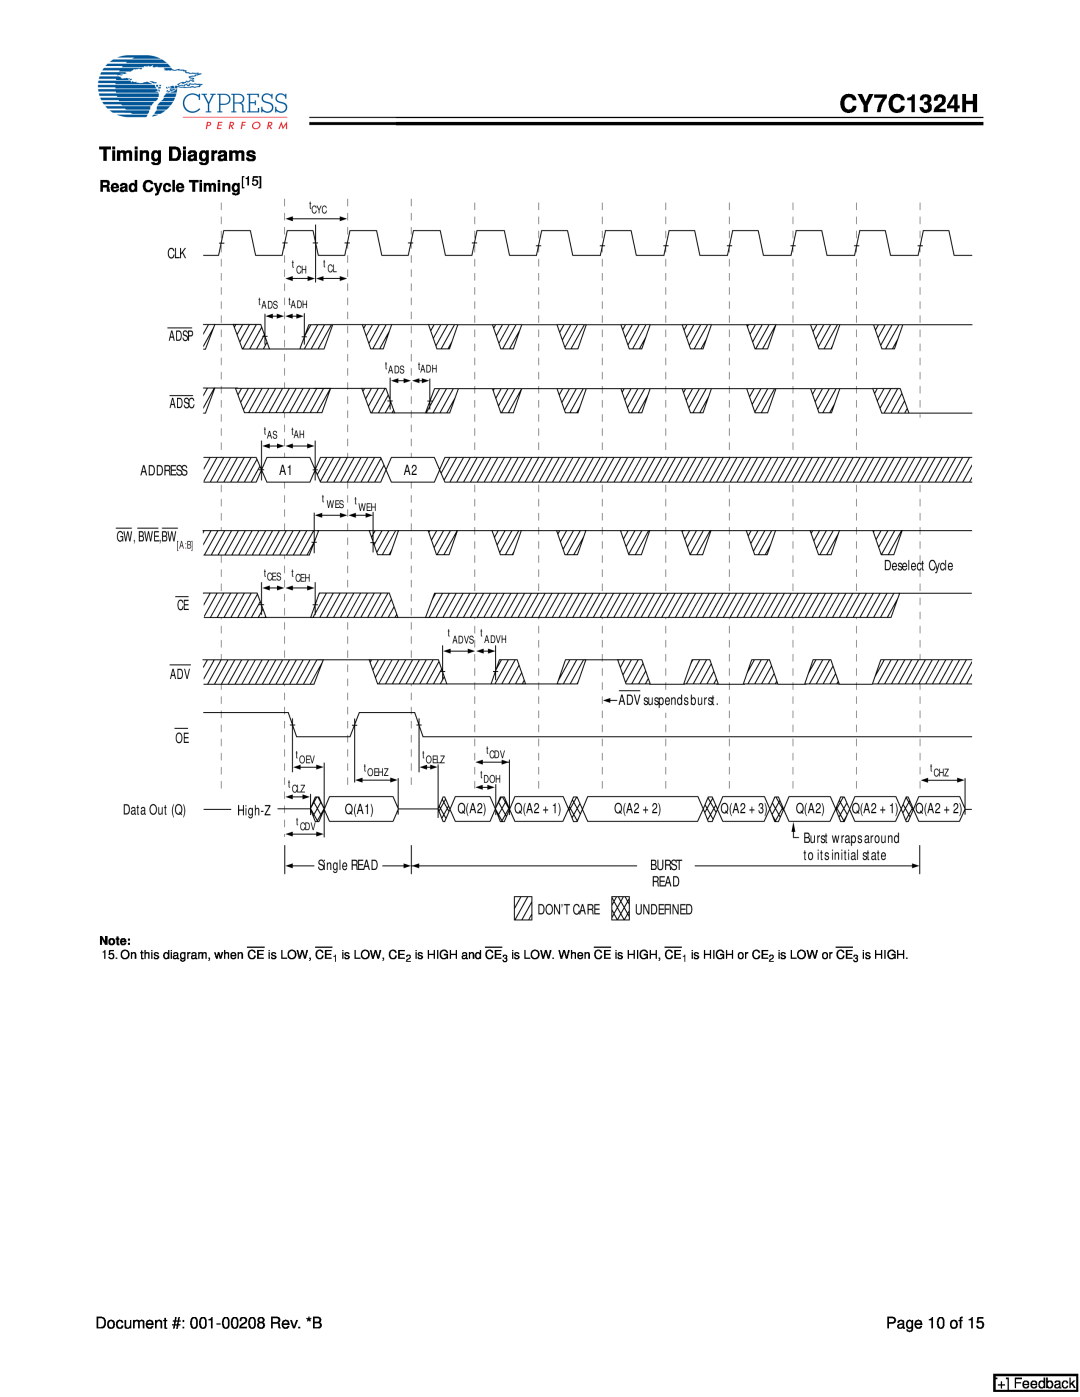 Cypress CY7C1324H manual Timing Diagrams, Read Cycle Timing15, + Feedback 